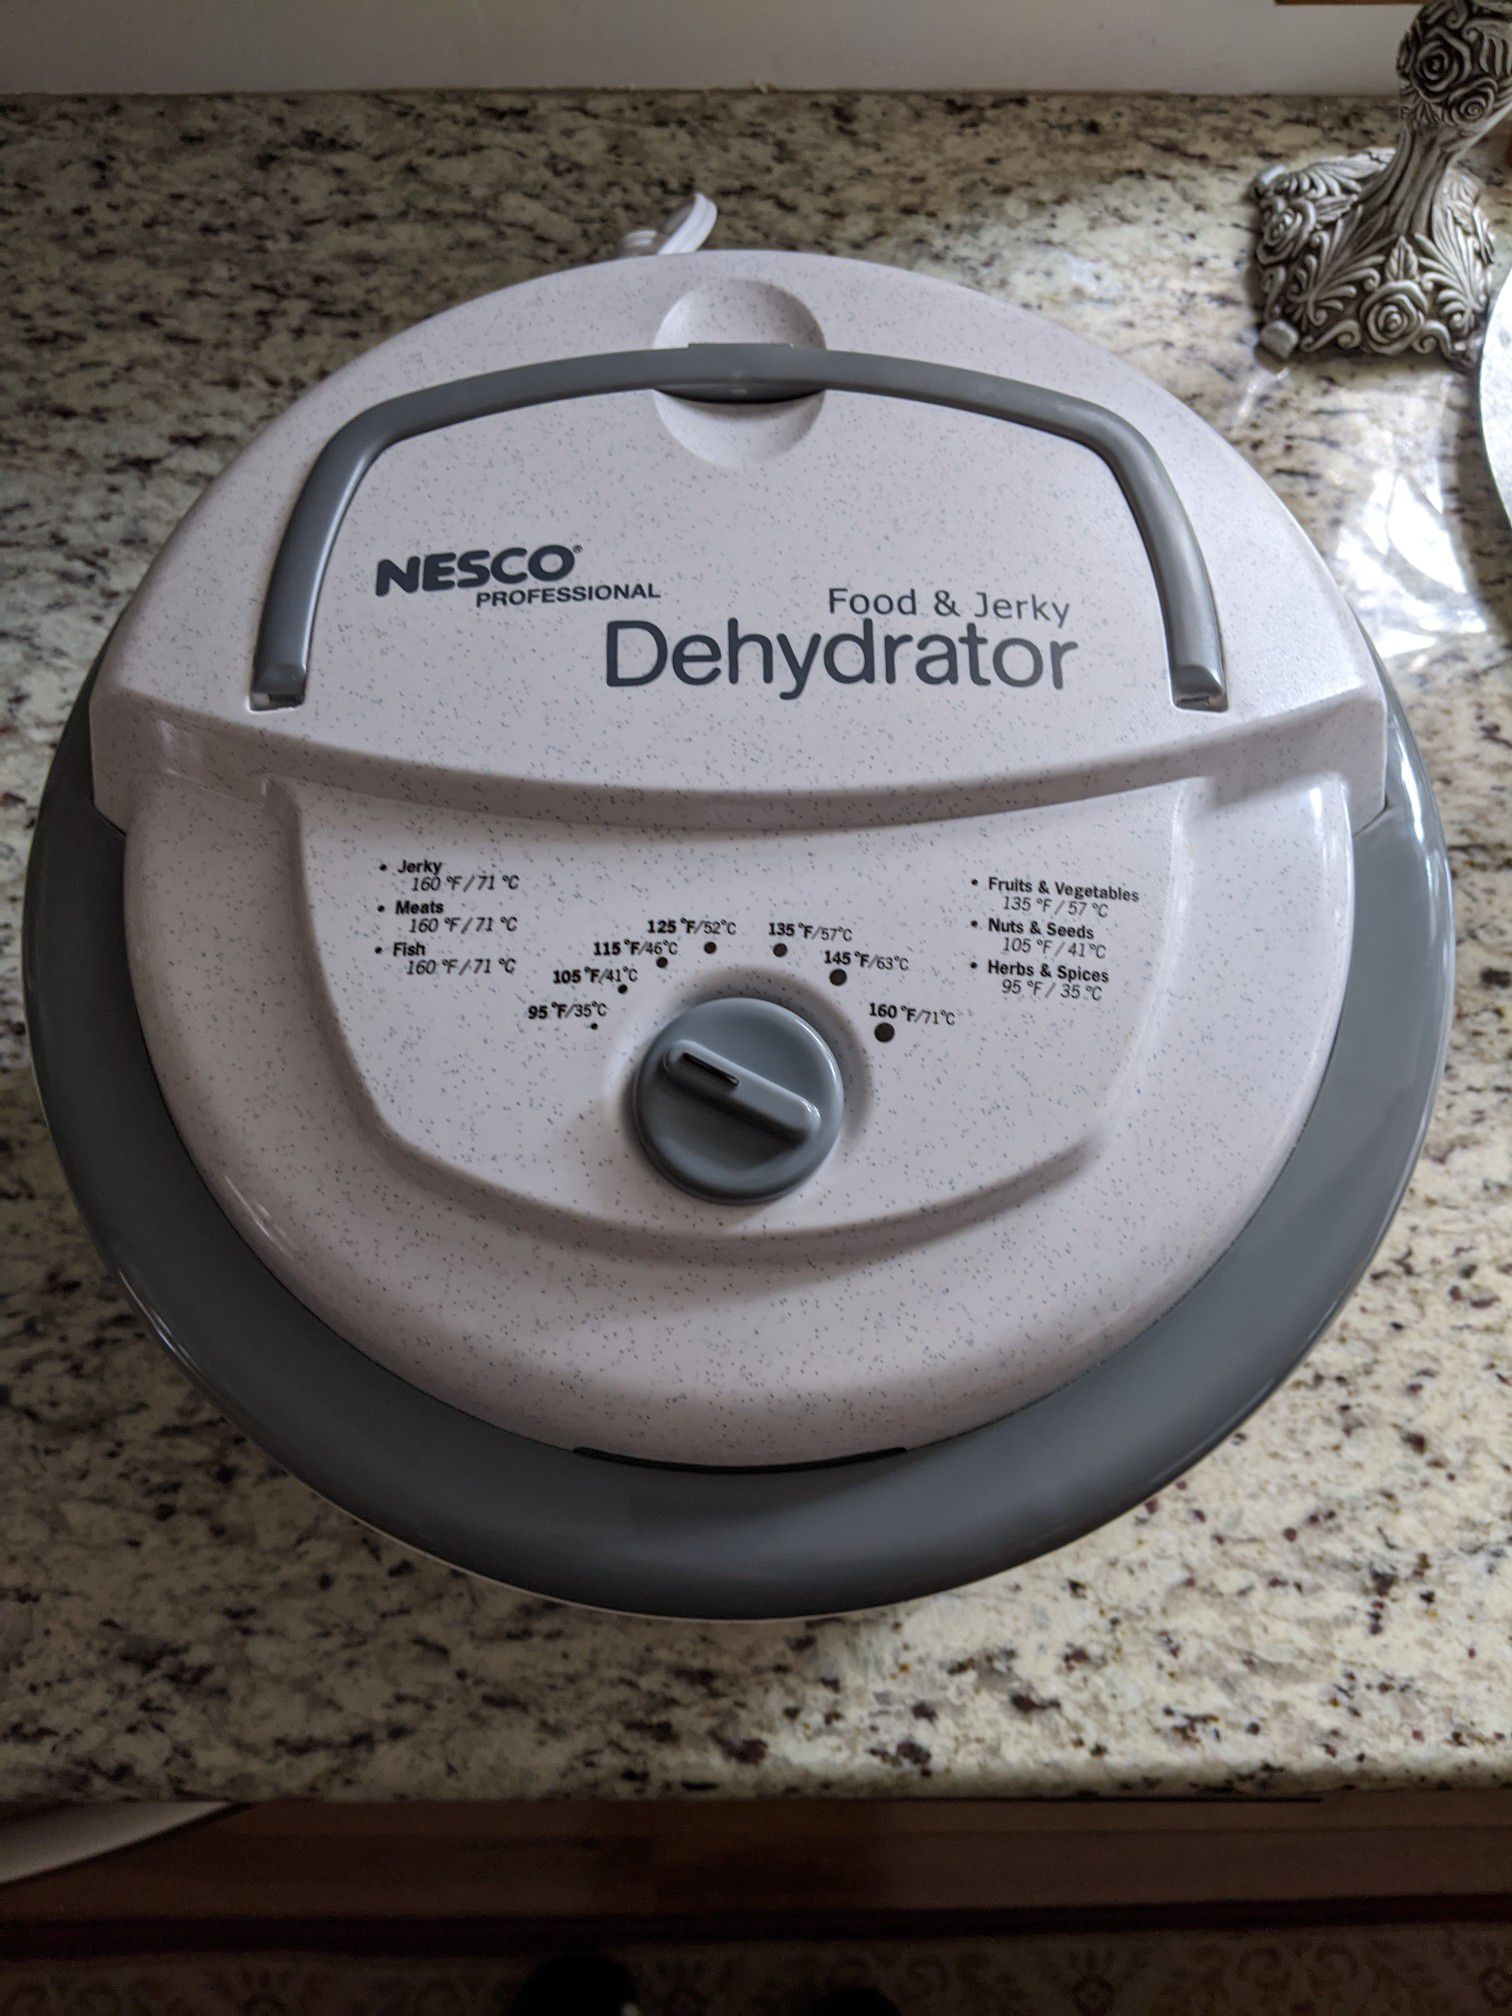 Nesco FD-75A Professional Food & Jerky Dehydrator